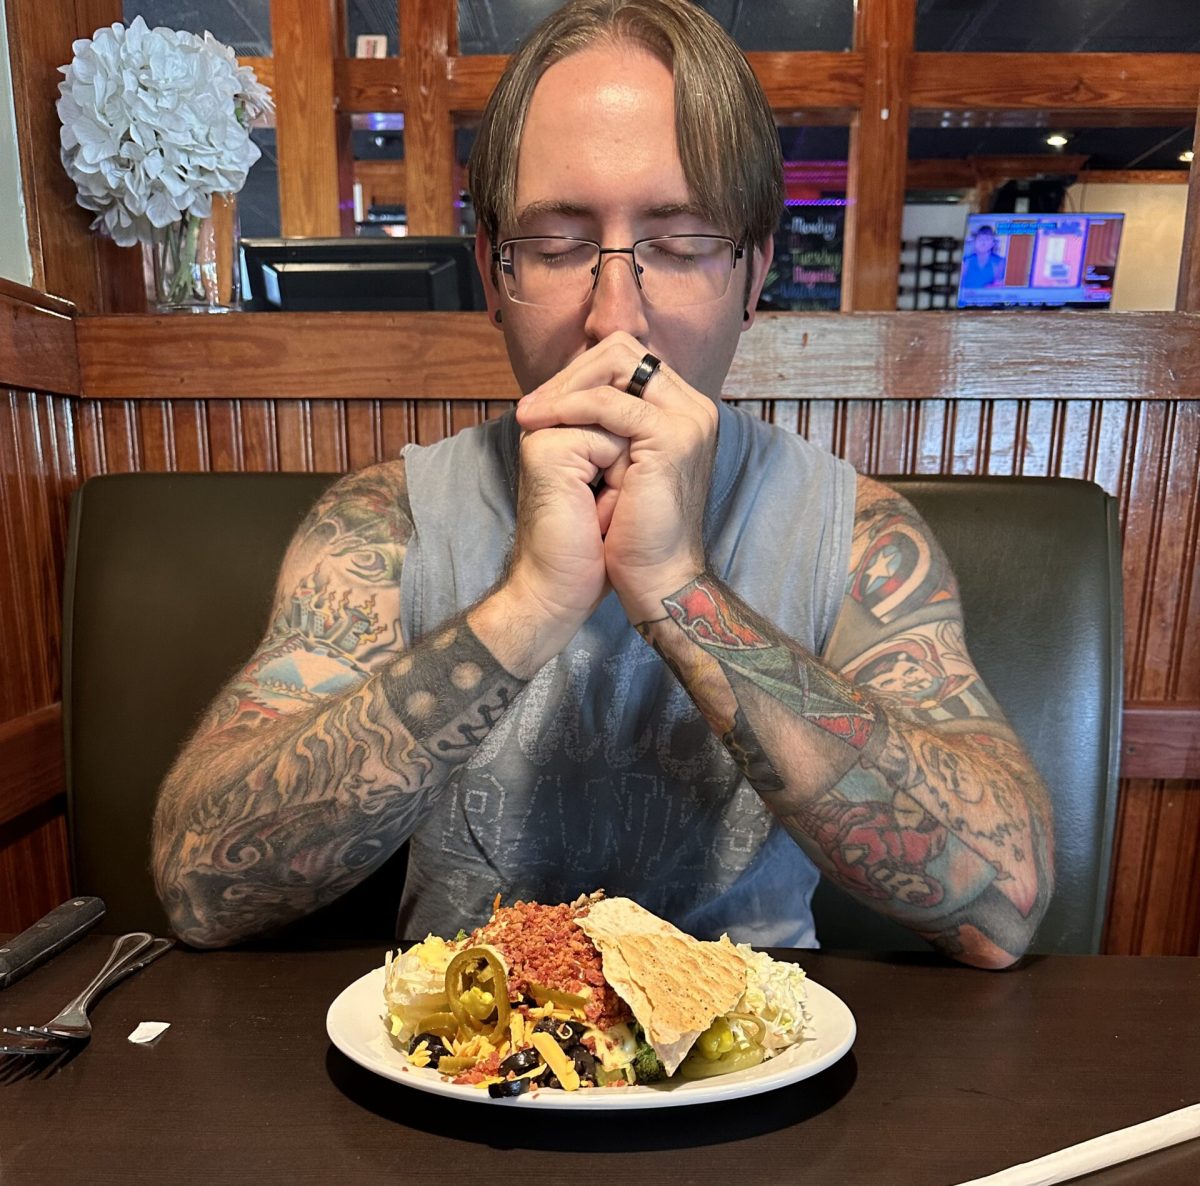 Mr. Sova flaunts his tattoos while enjoying a delectable salad